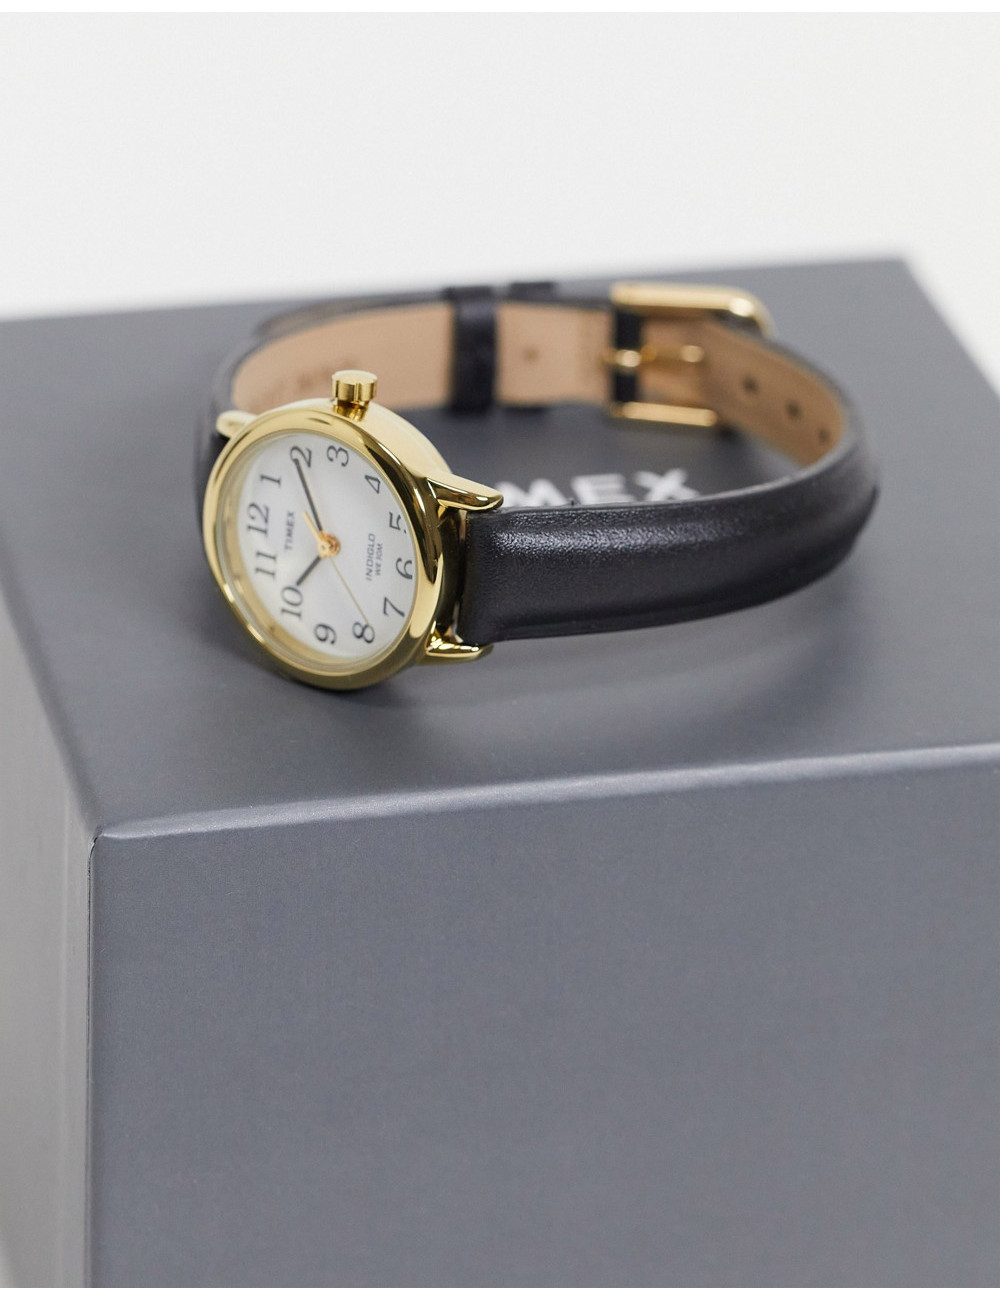 Timex leather strap watch...